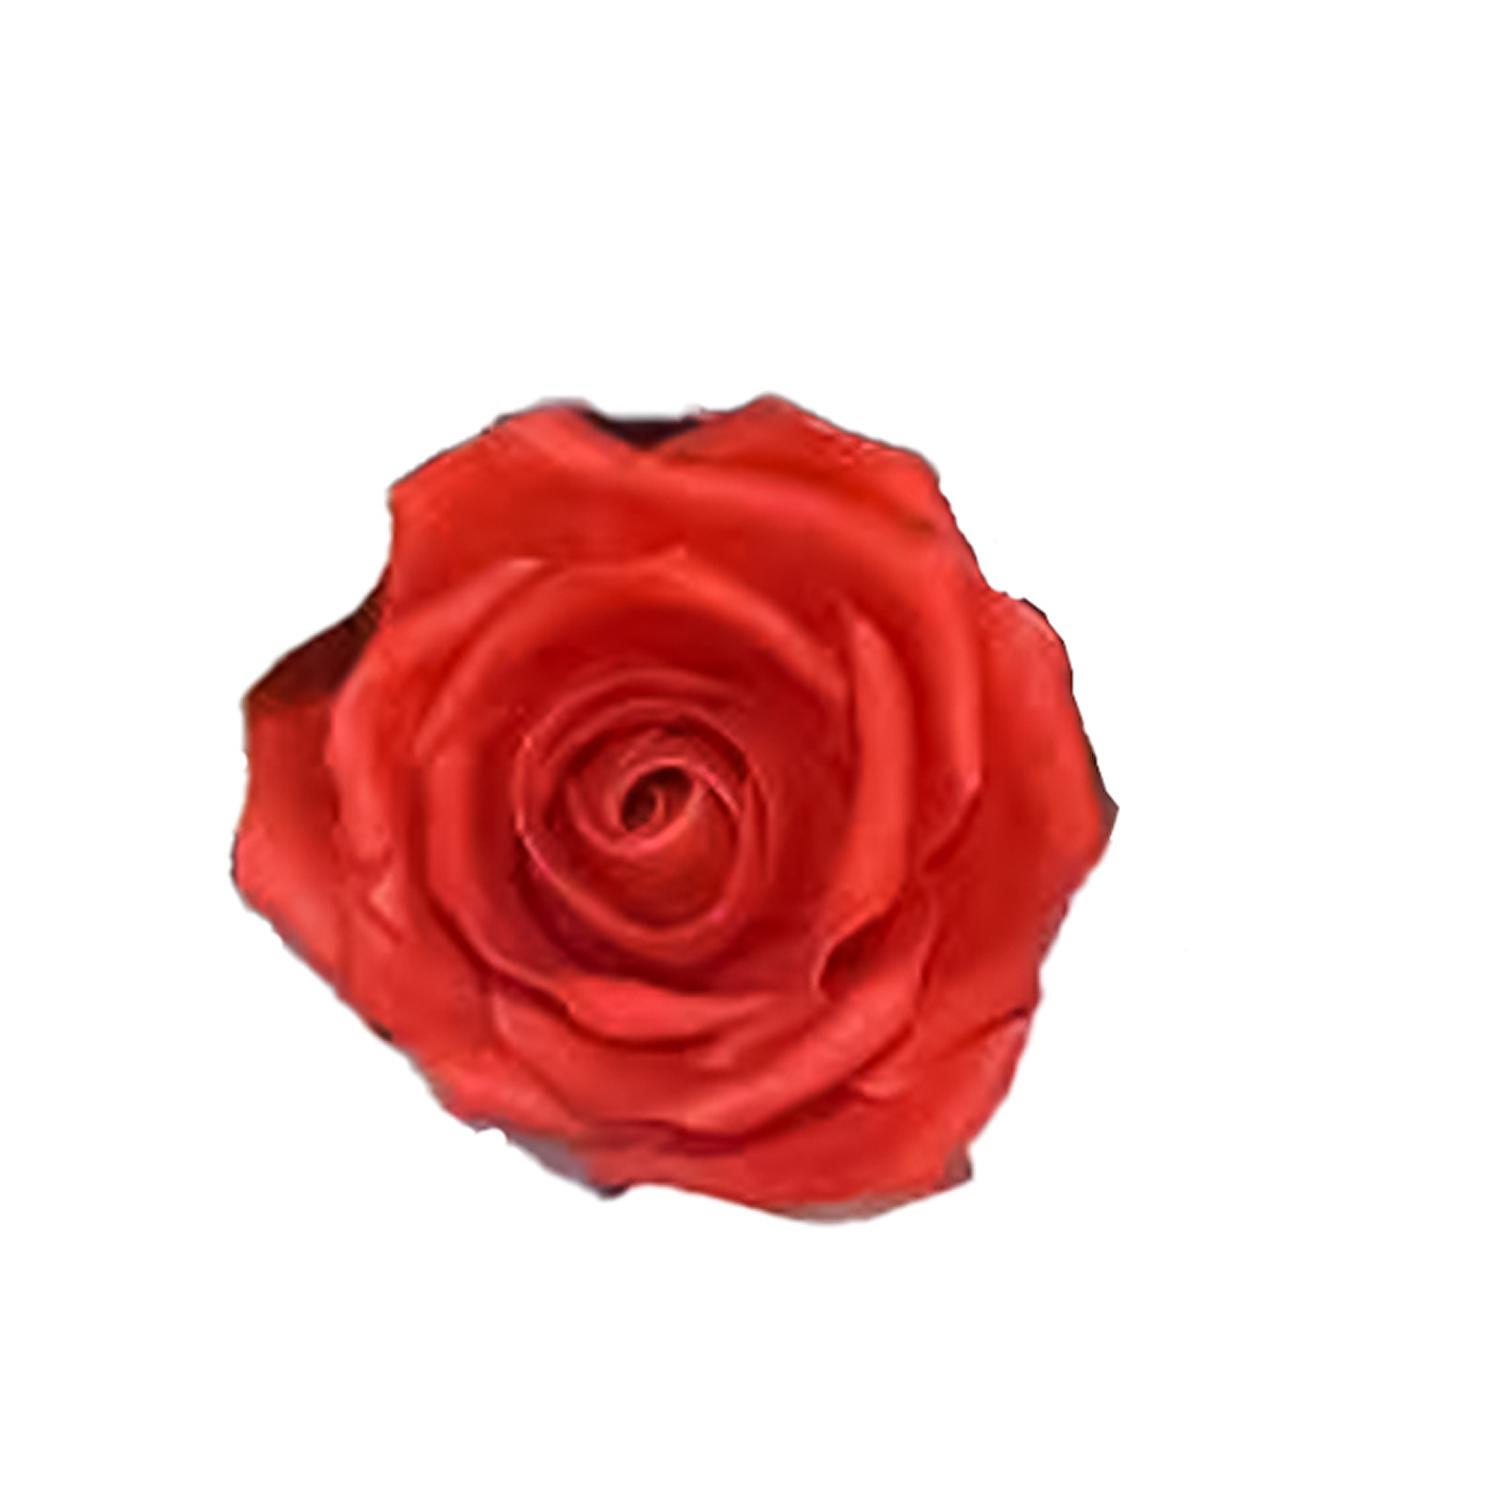 PURPLE SUGAR LARGE ROSE FLOWER RED